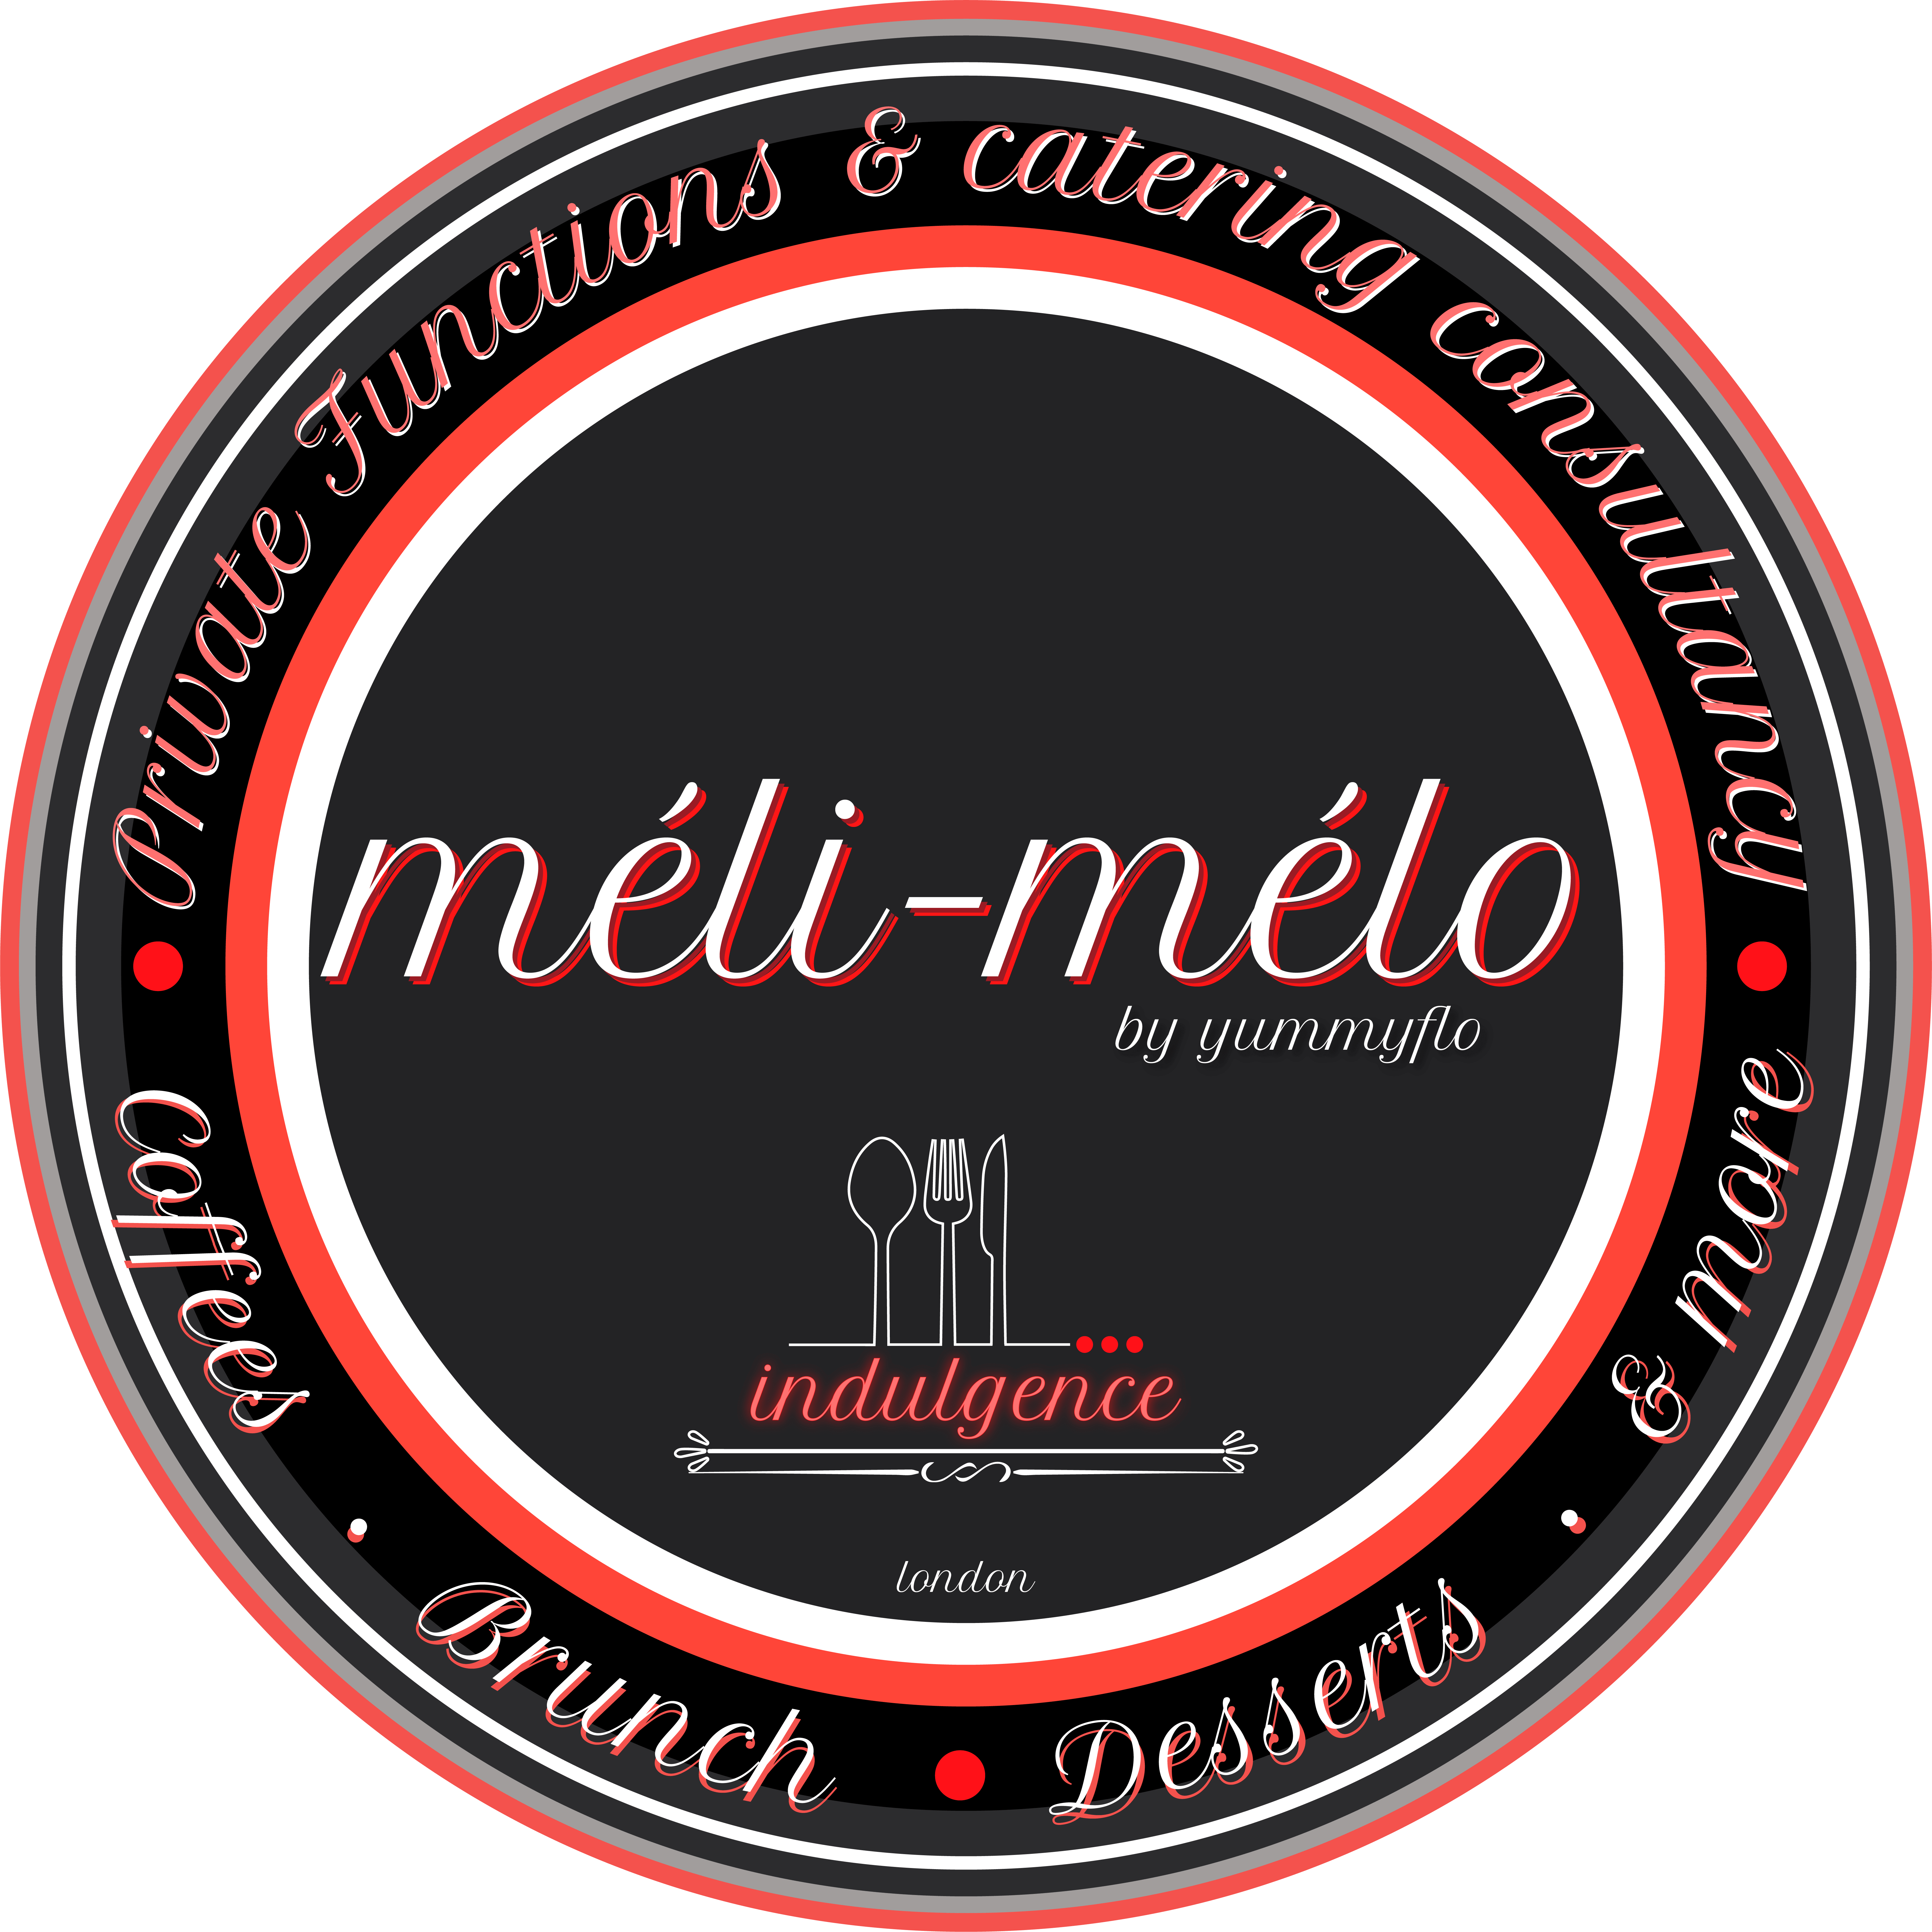 Meli Melo – Where Italian craftsmanship meets London cool – Follow Meesh